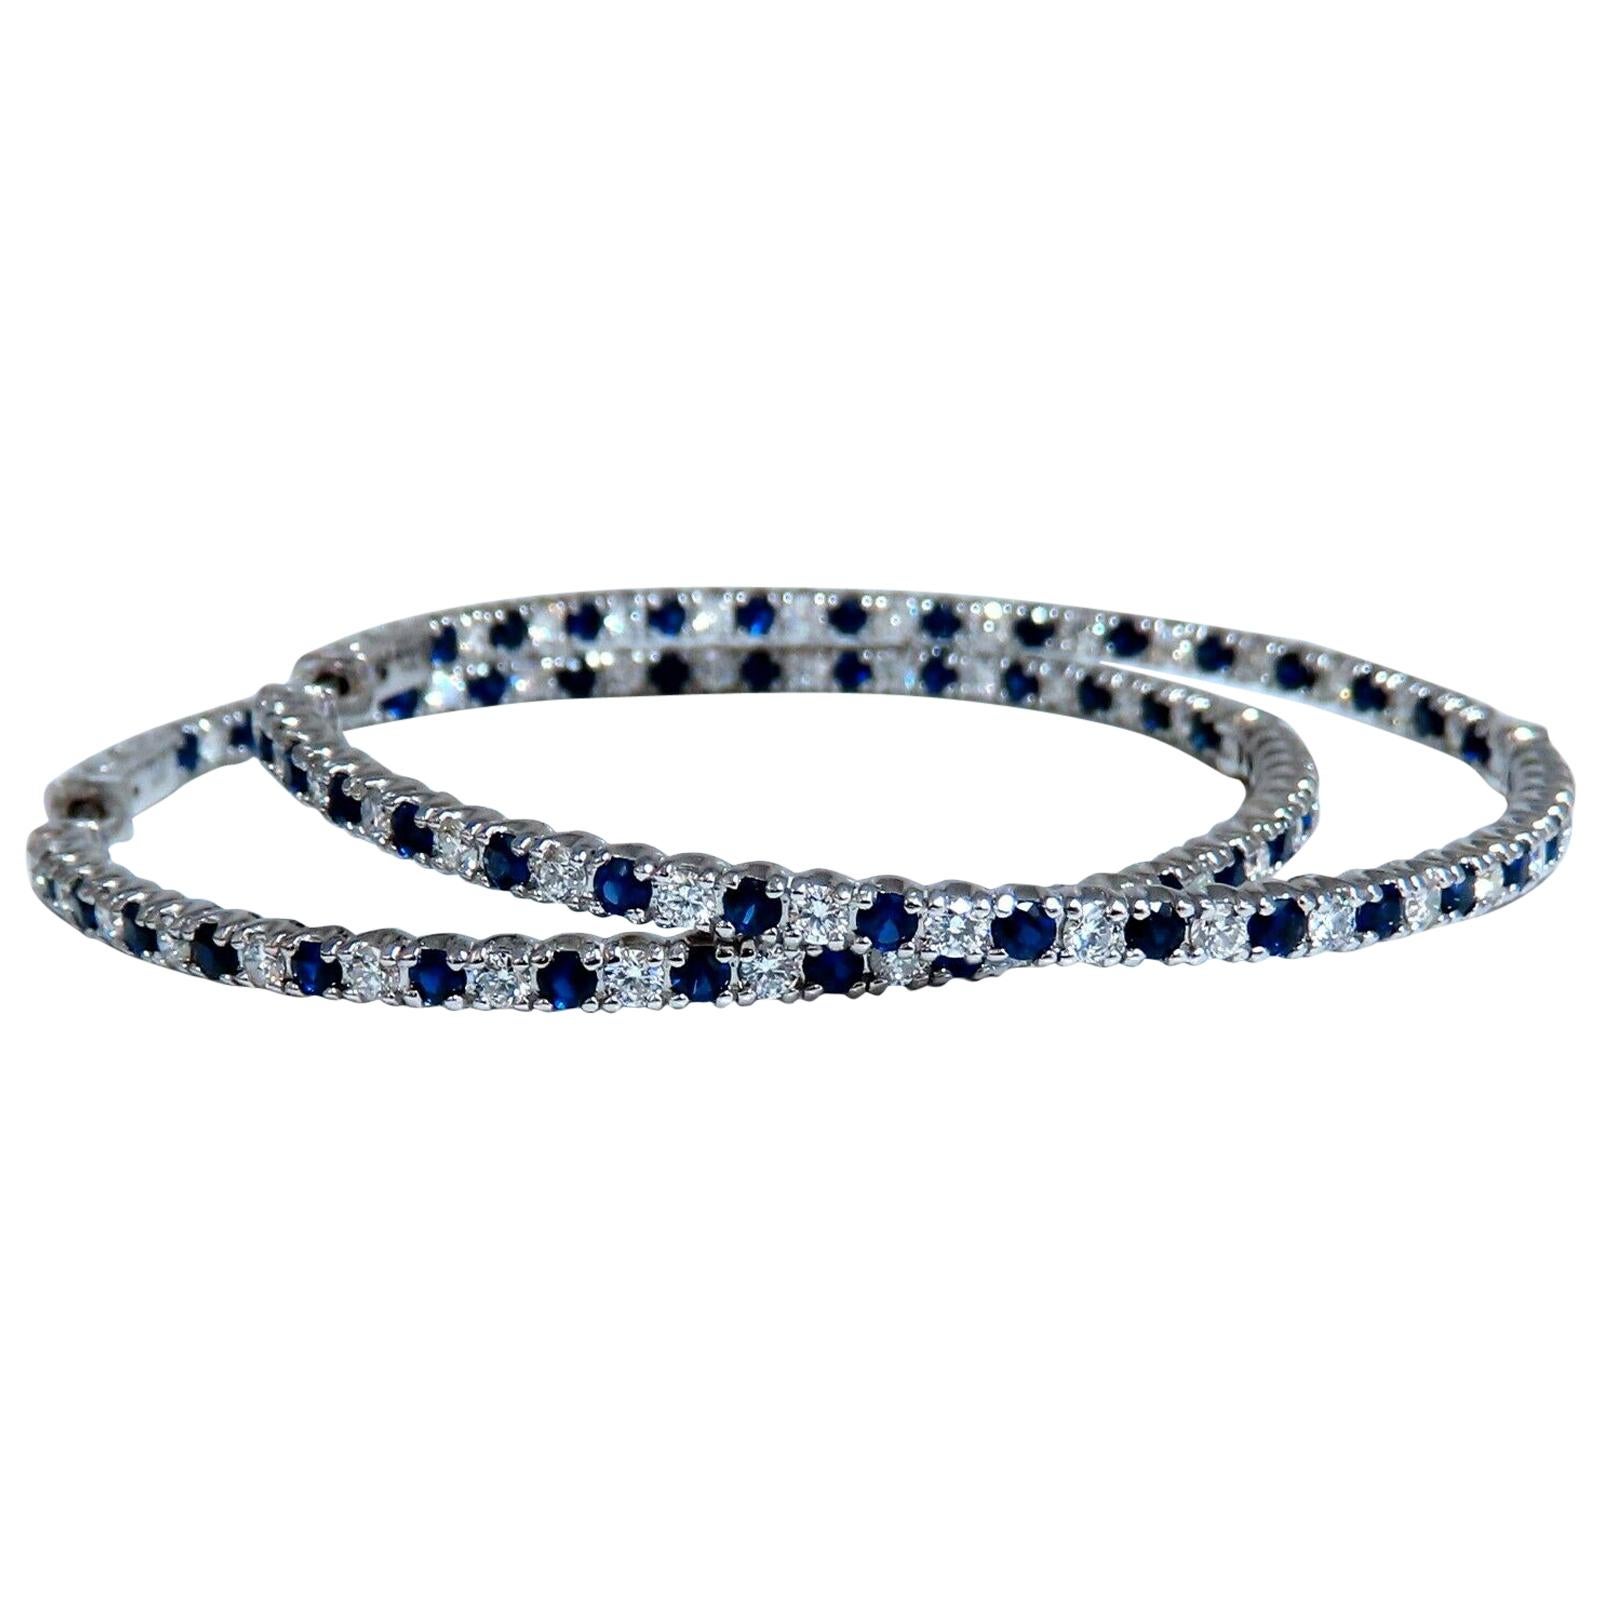 5.11 Carat Natural Sapphires Diamonds in Out Hoop Earrings 14 Karat